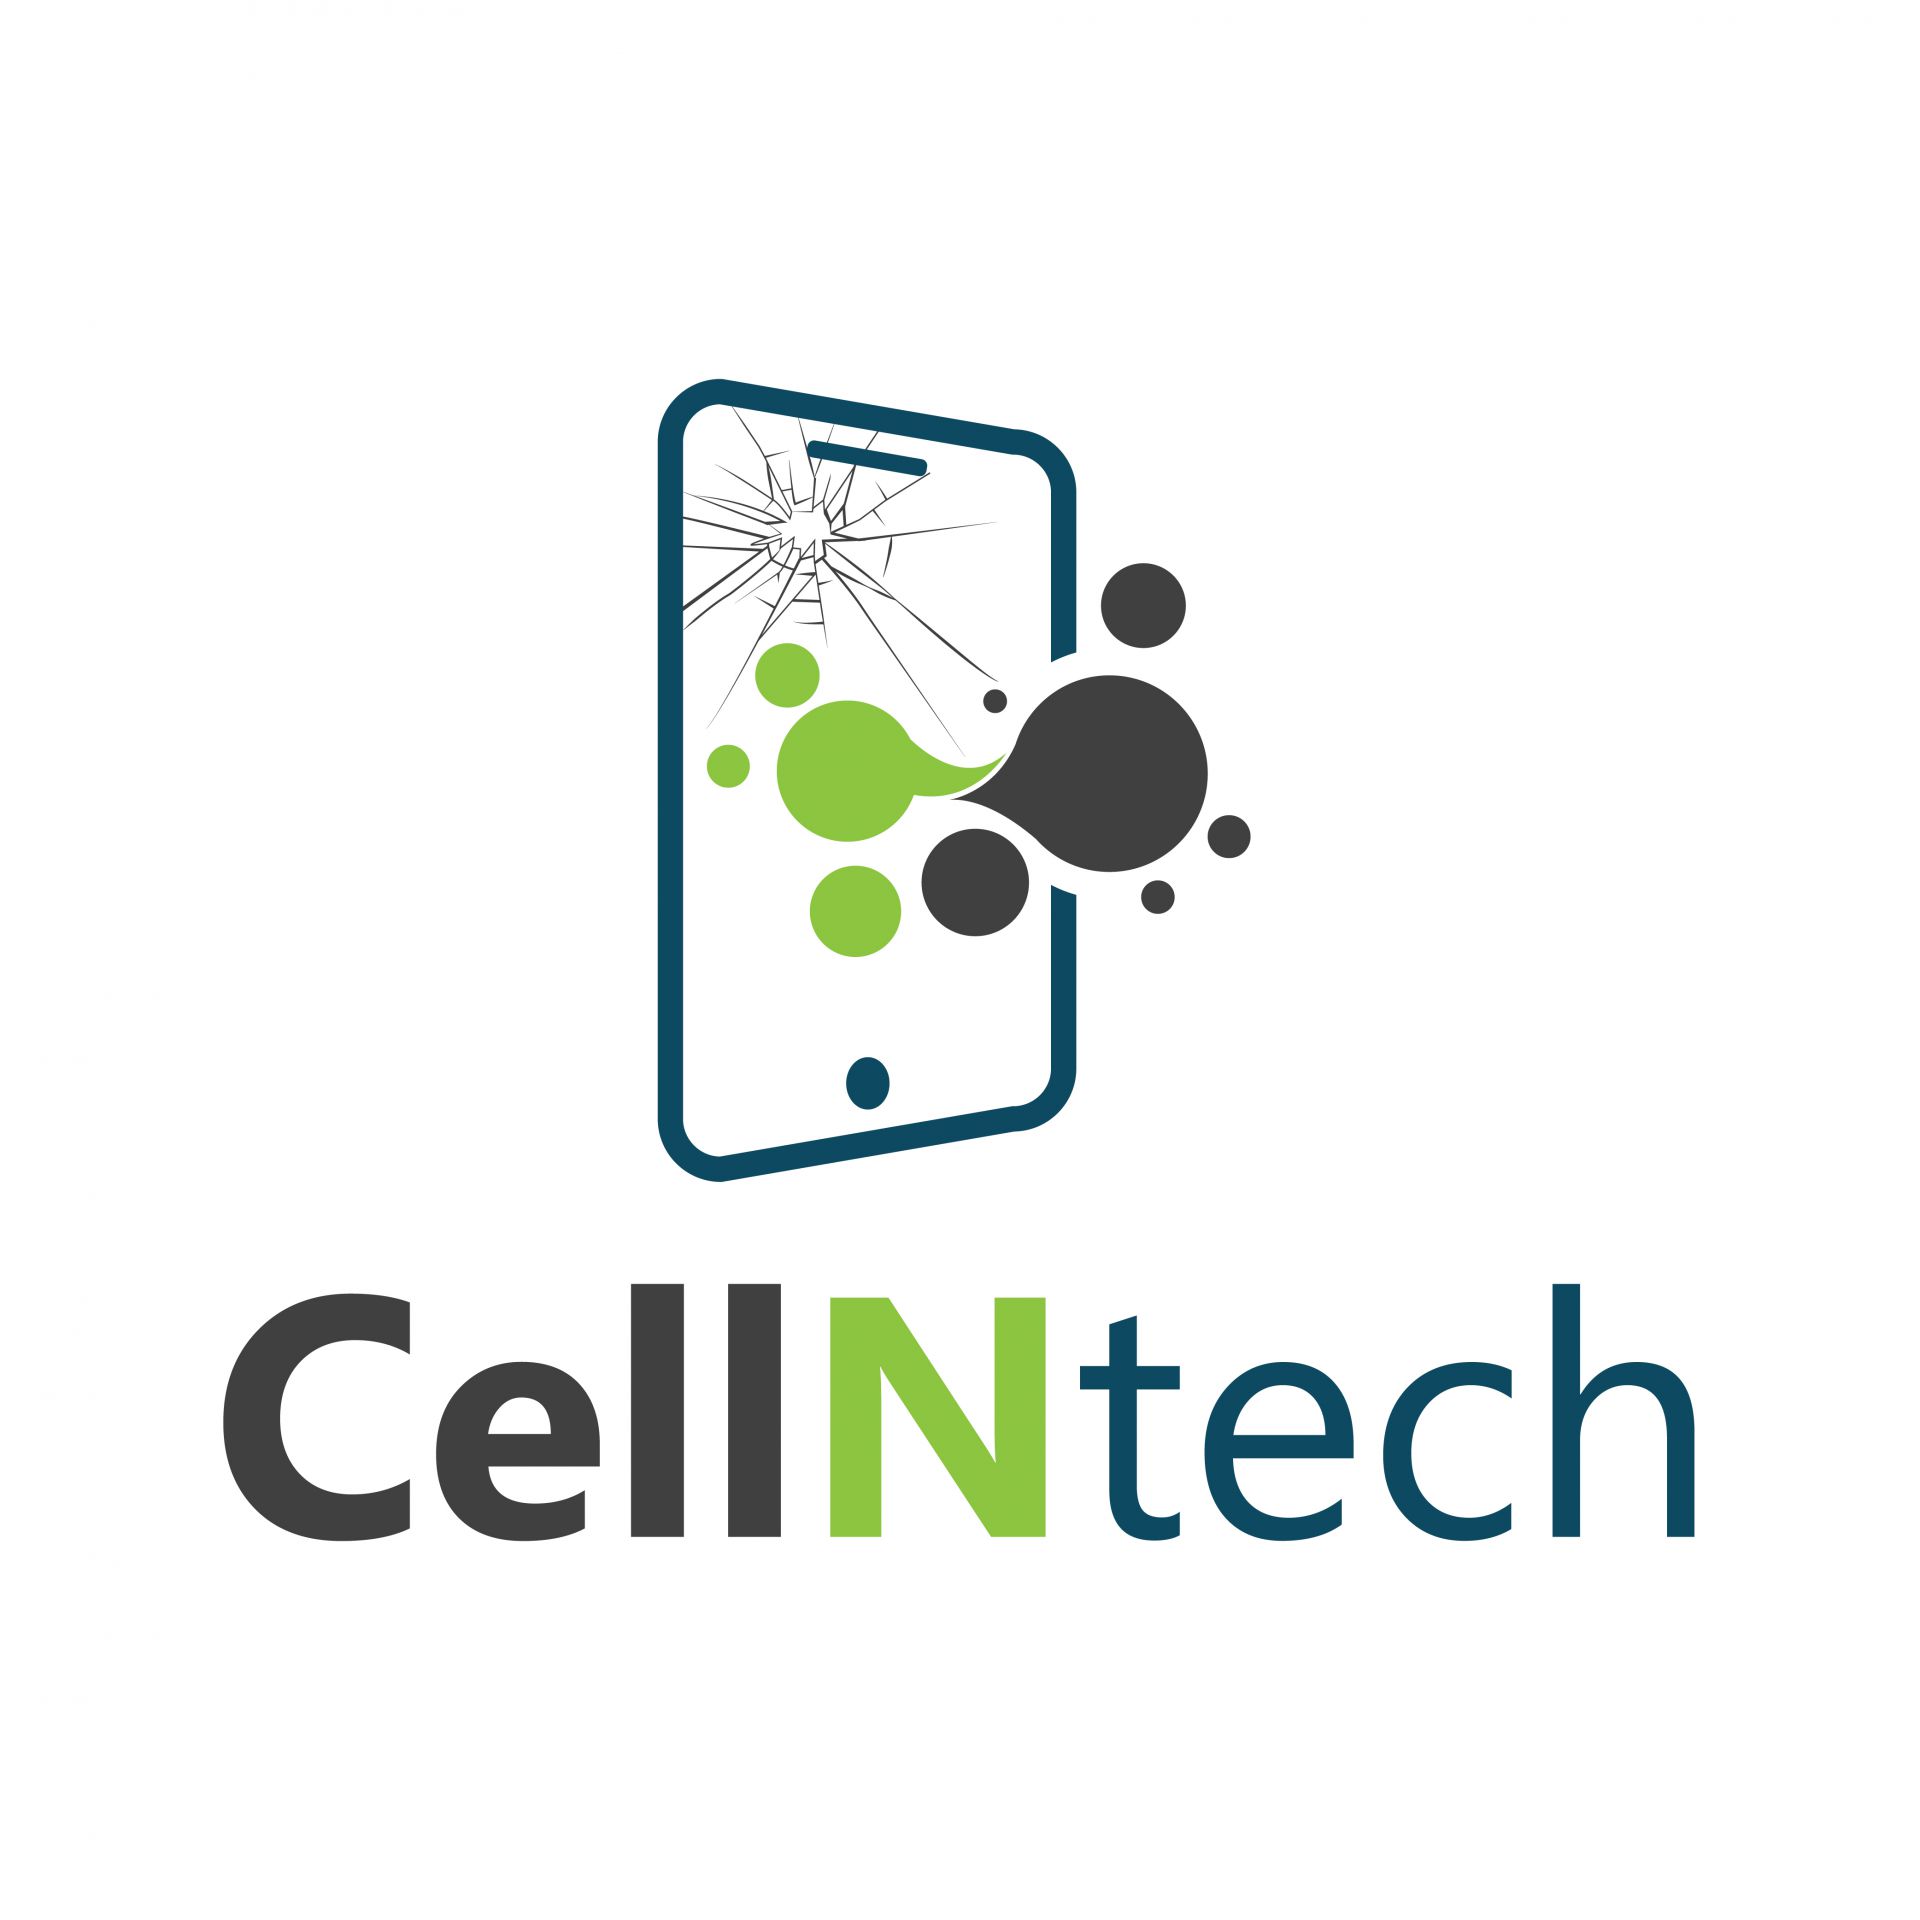 CellNtech-logo-01-scaled.jpg